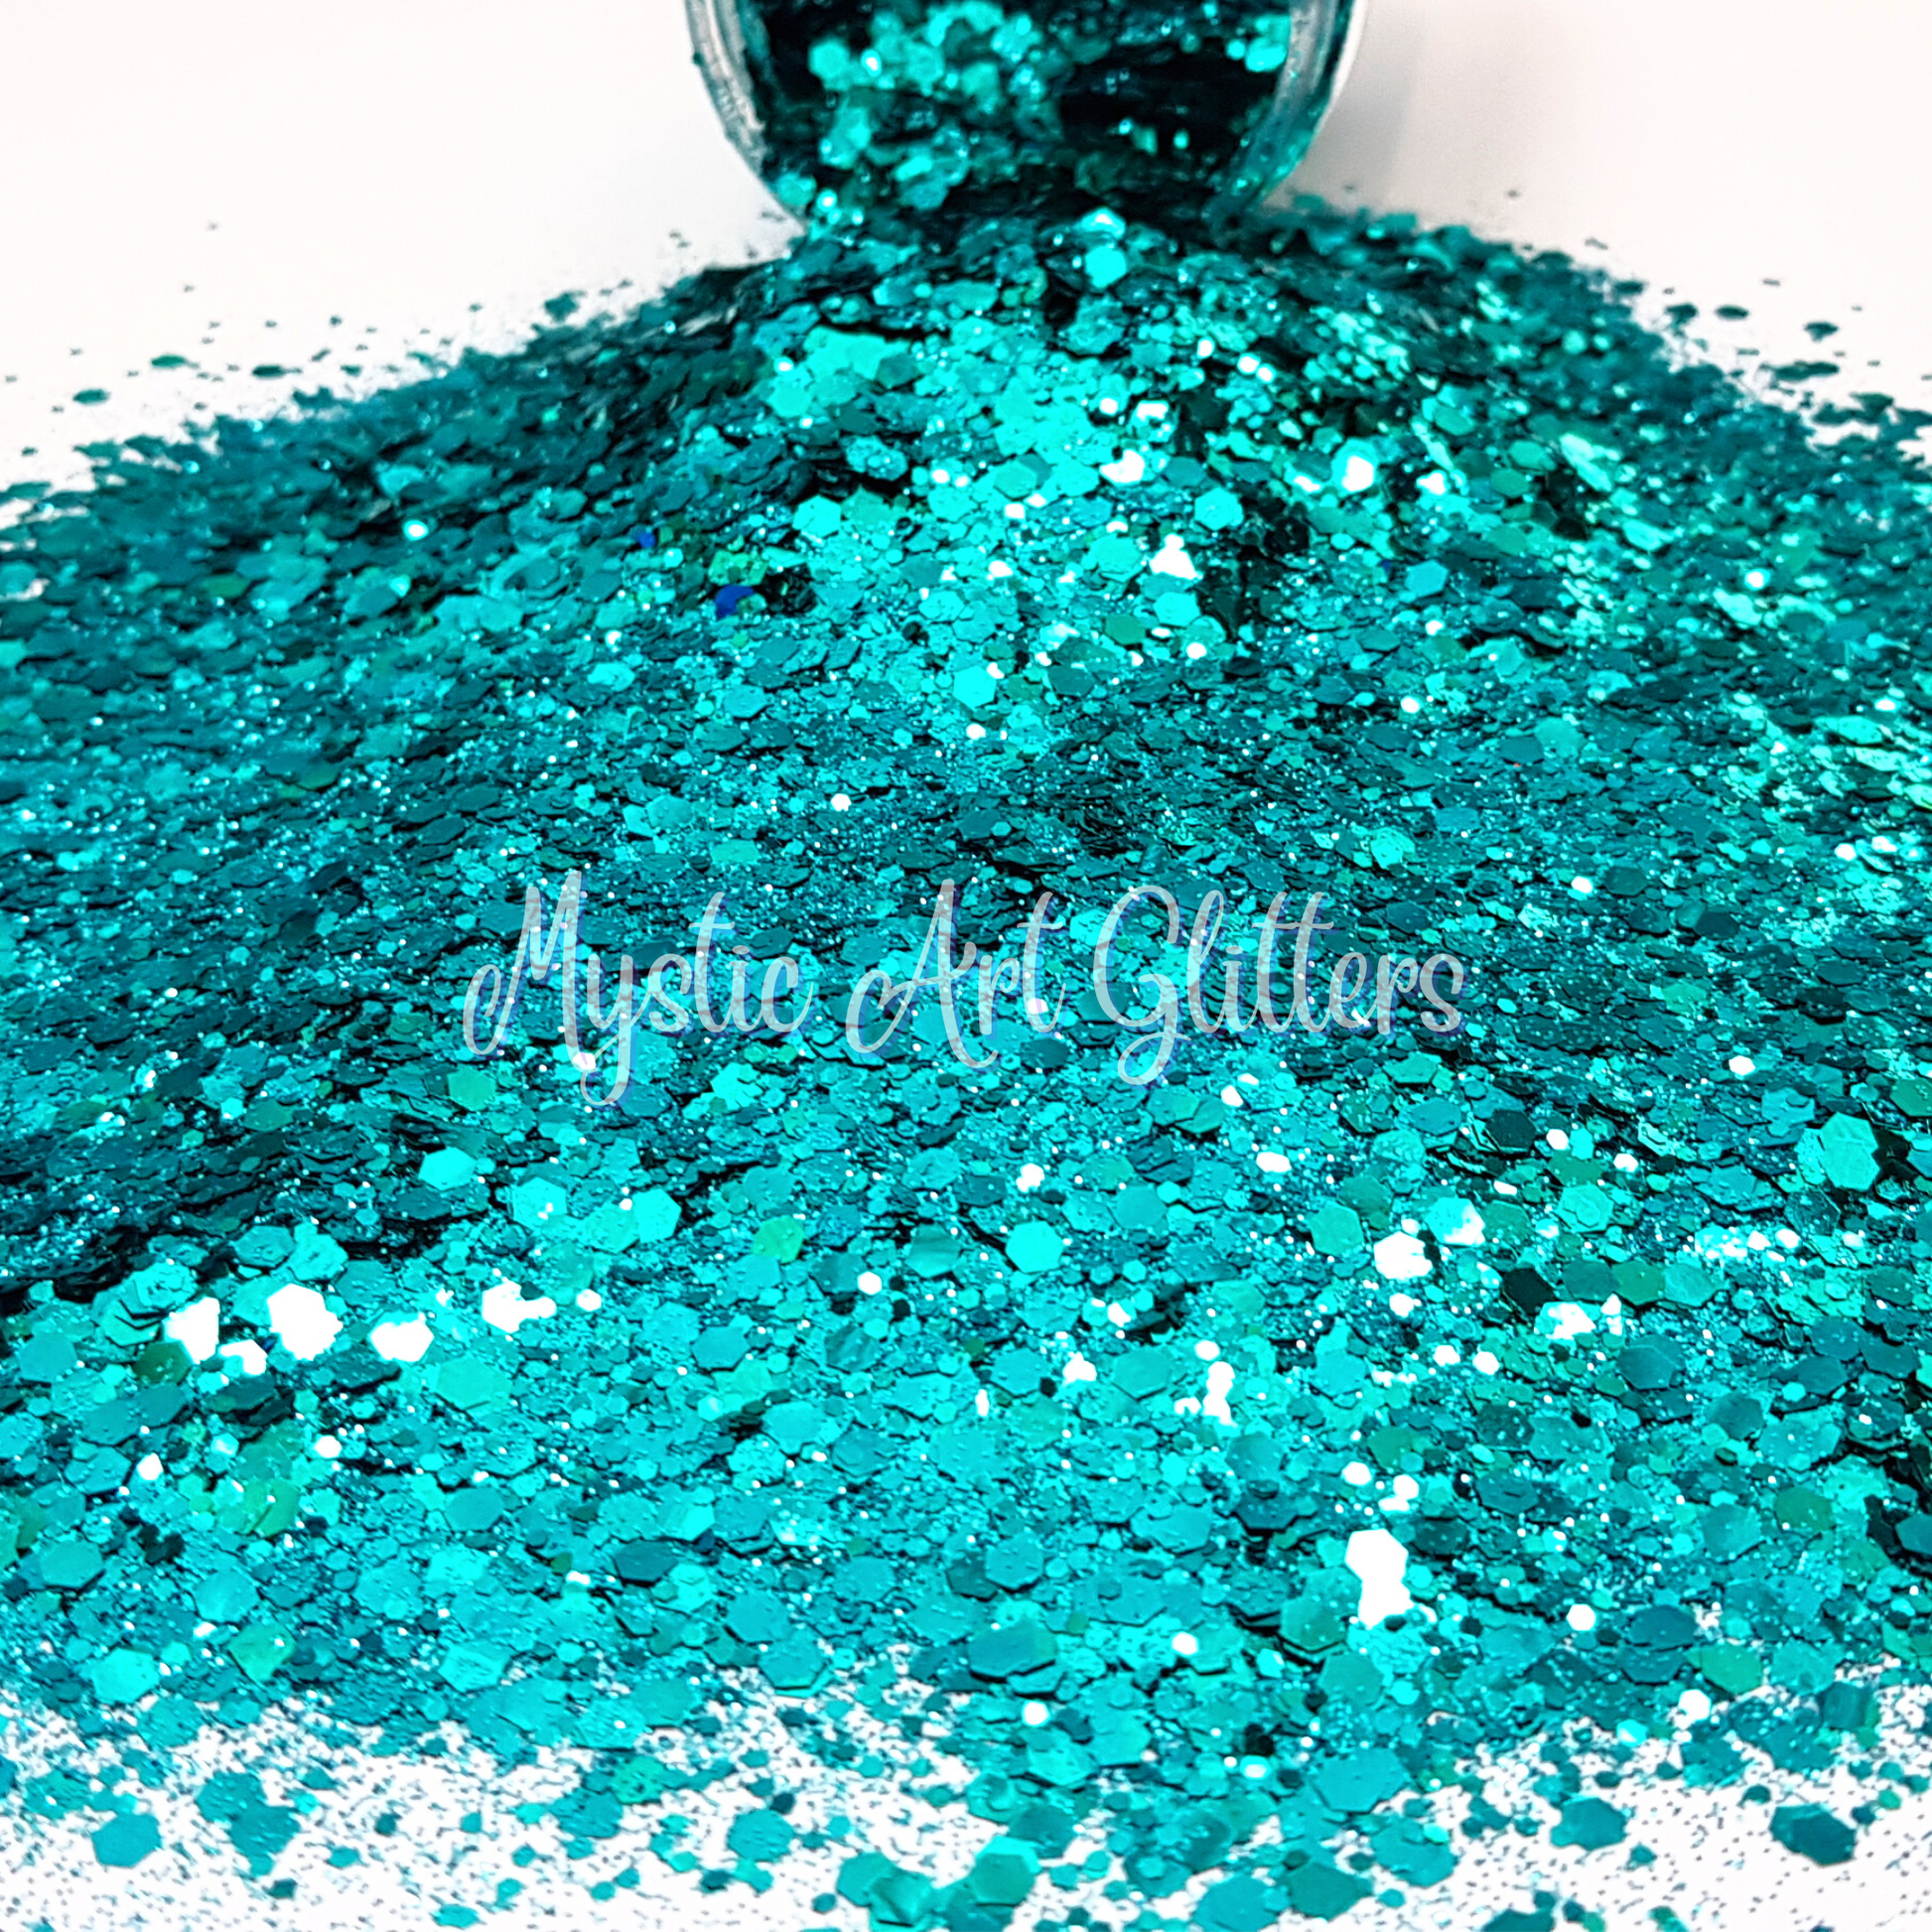 Bon Voyage is a teal turquoise aquamarine glitter